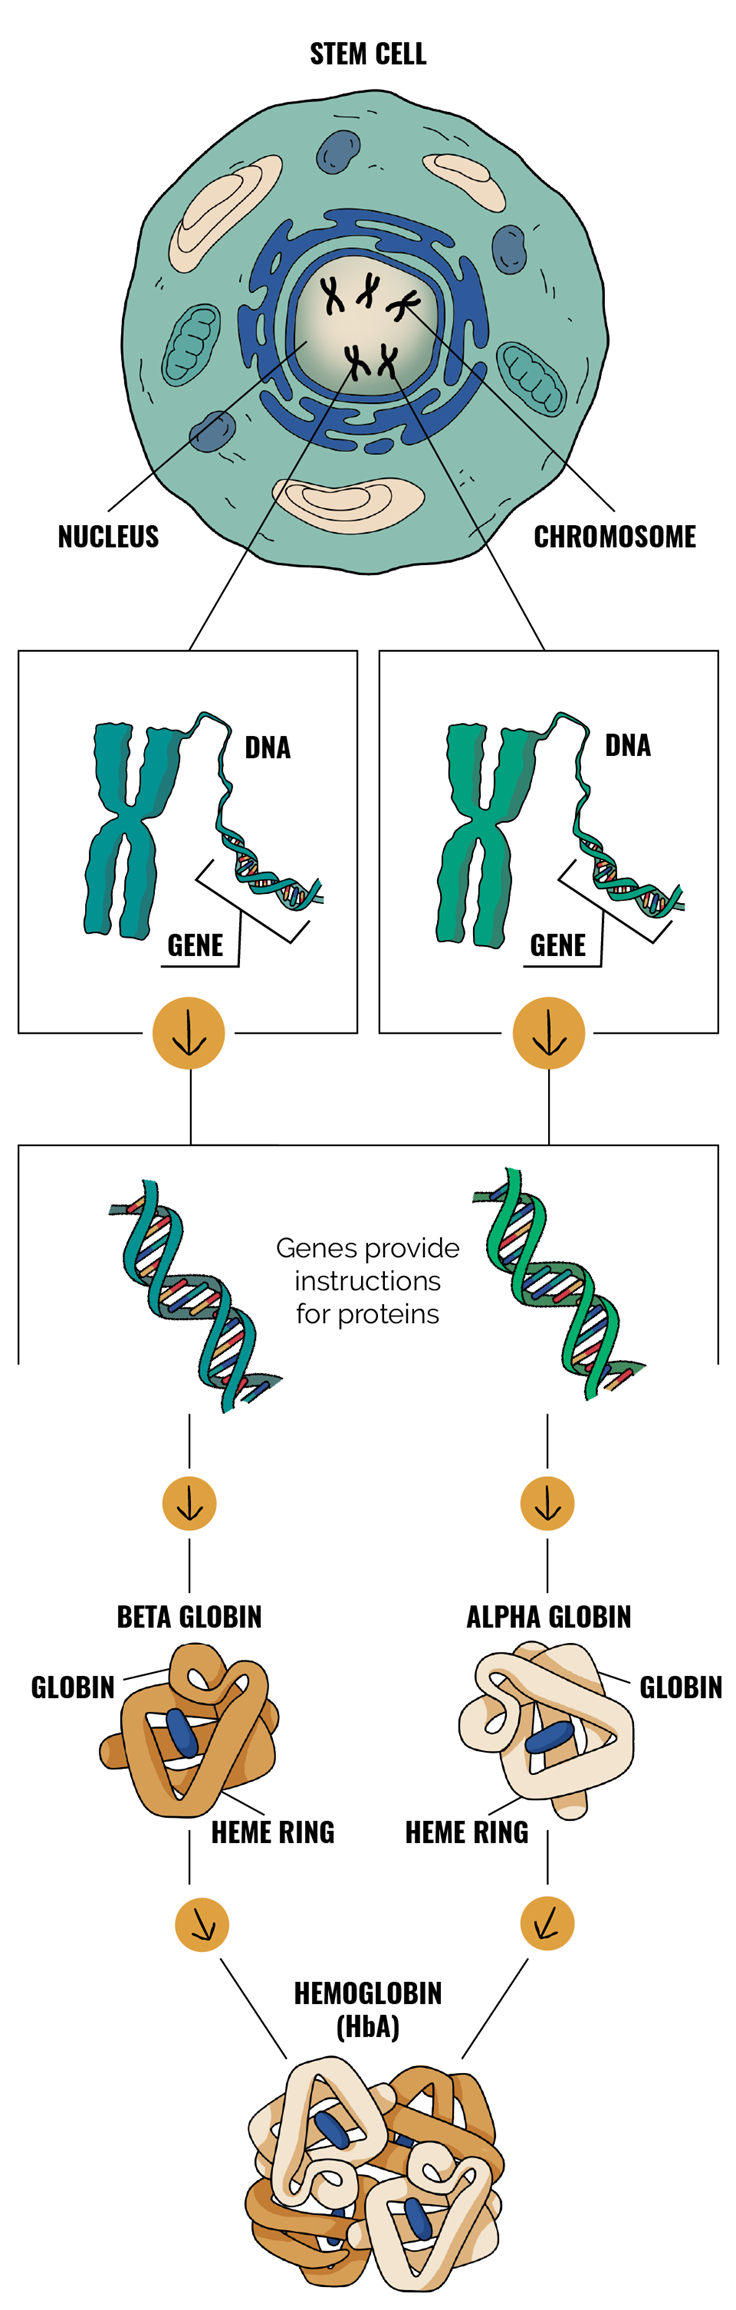 Graphic depicting genetics and hemoglobin (HbA)